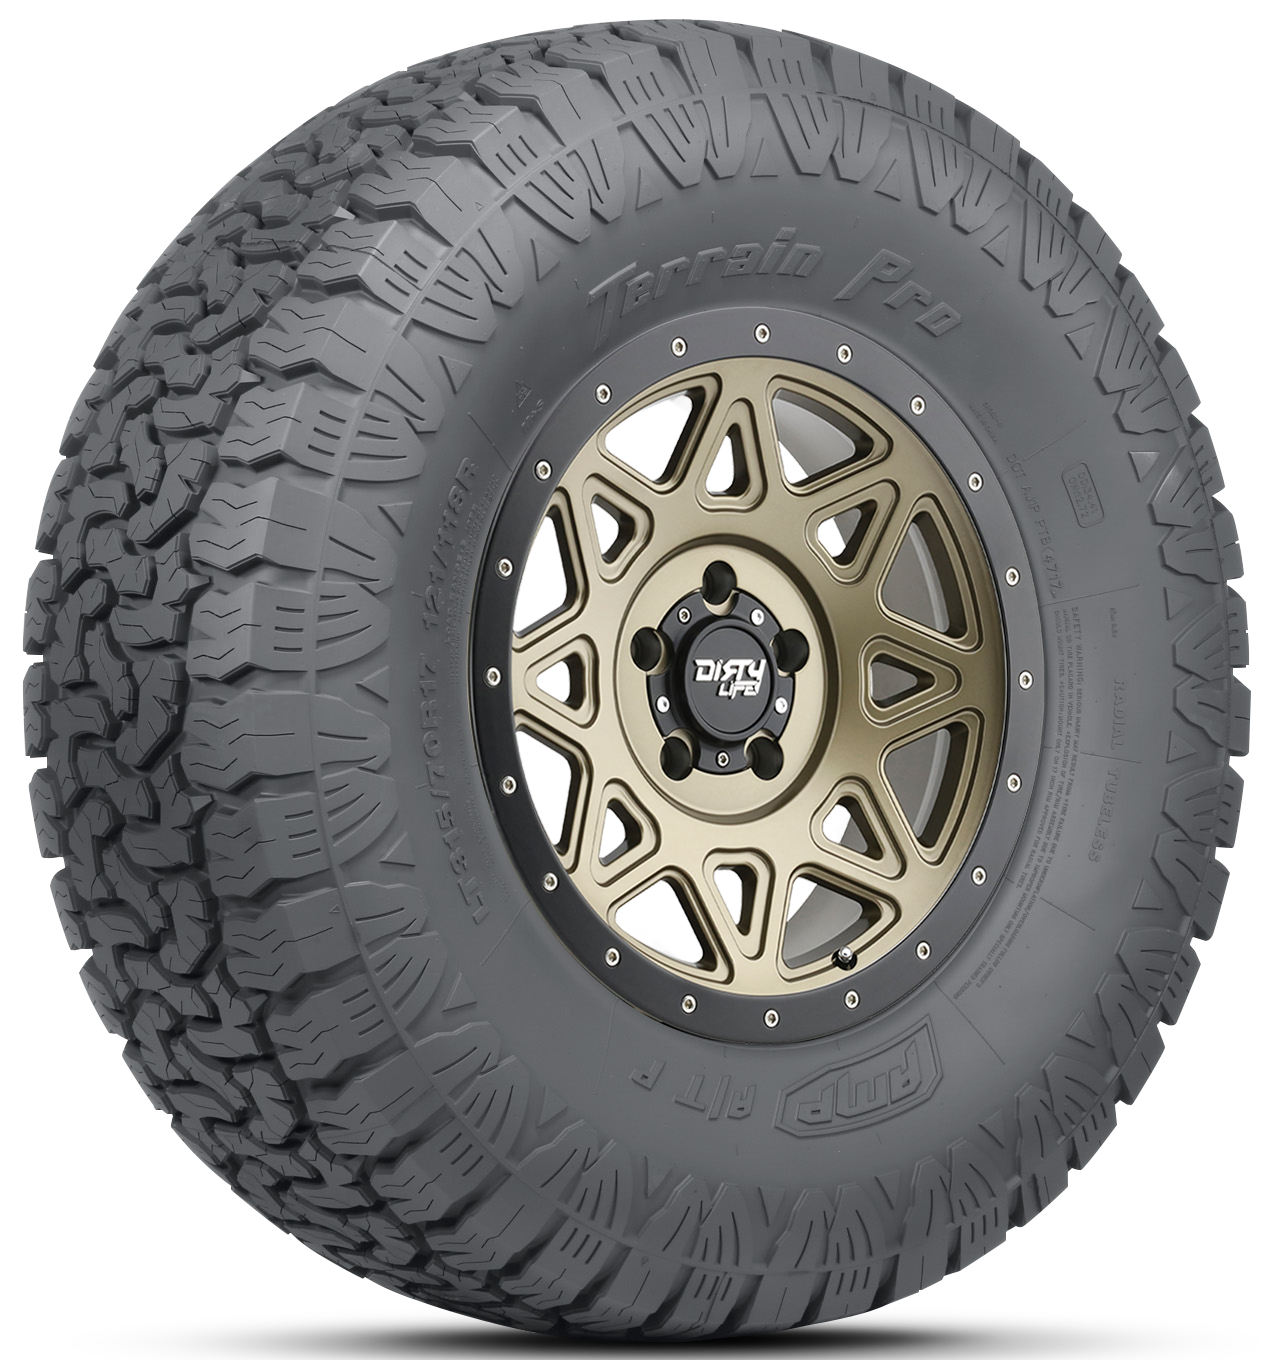 Terrain Pro A/T P Tire 33 x 12.50R24LT